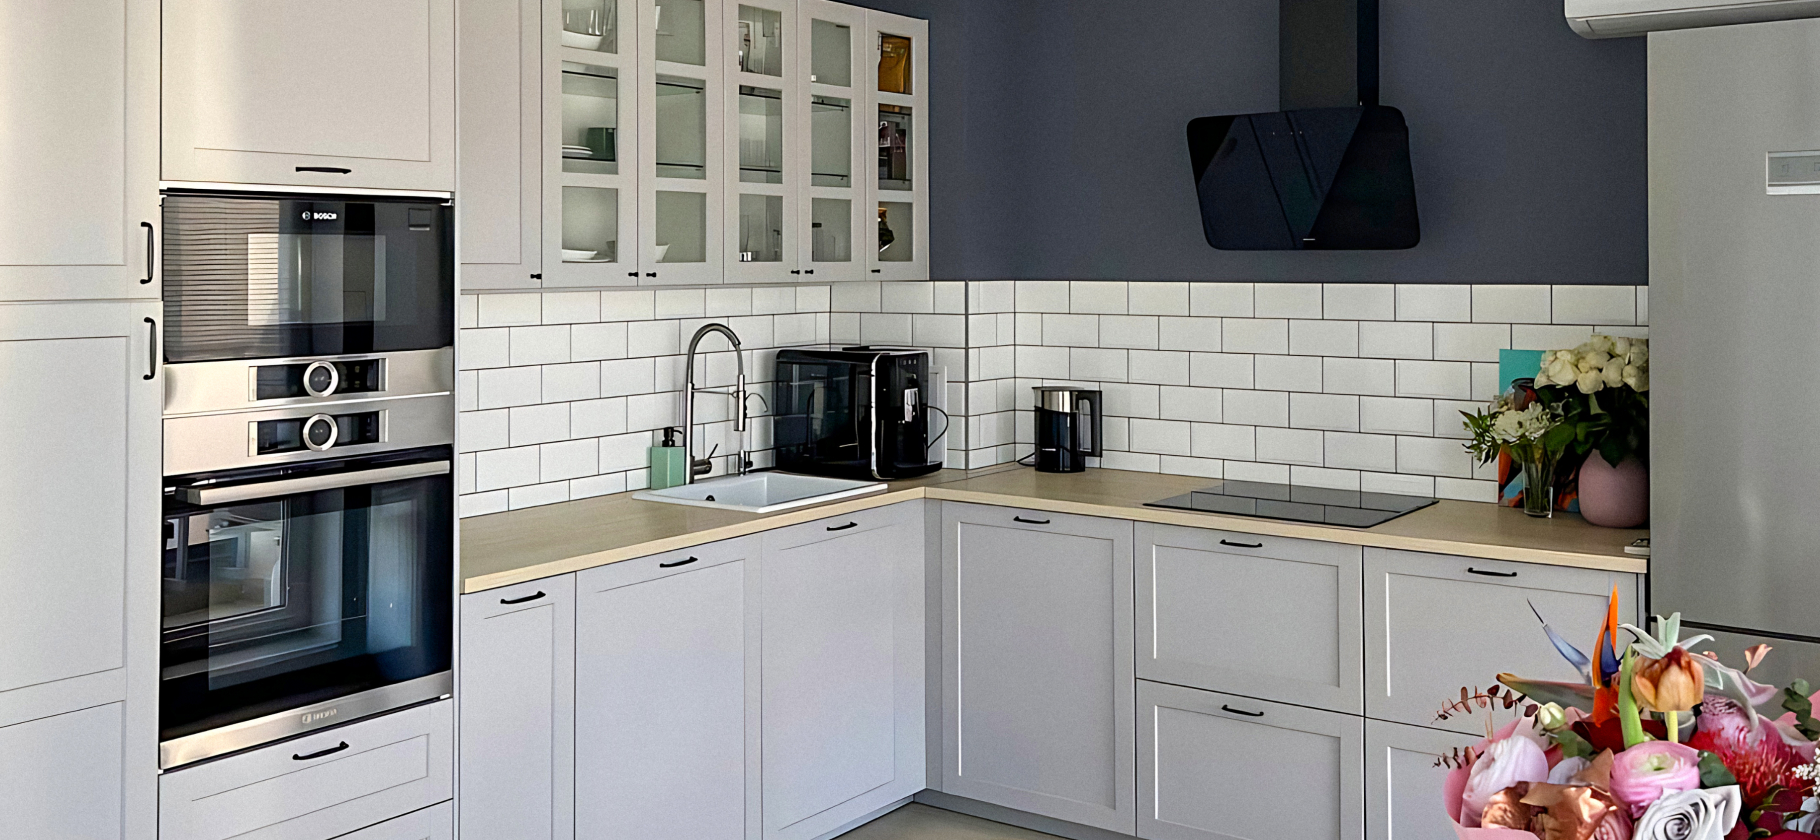 Кухня в квартире: планировки и конфигурации